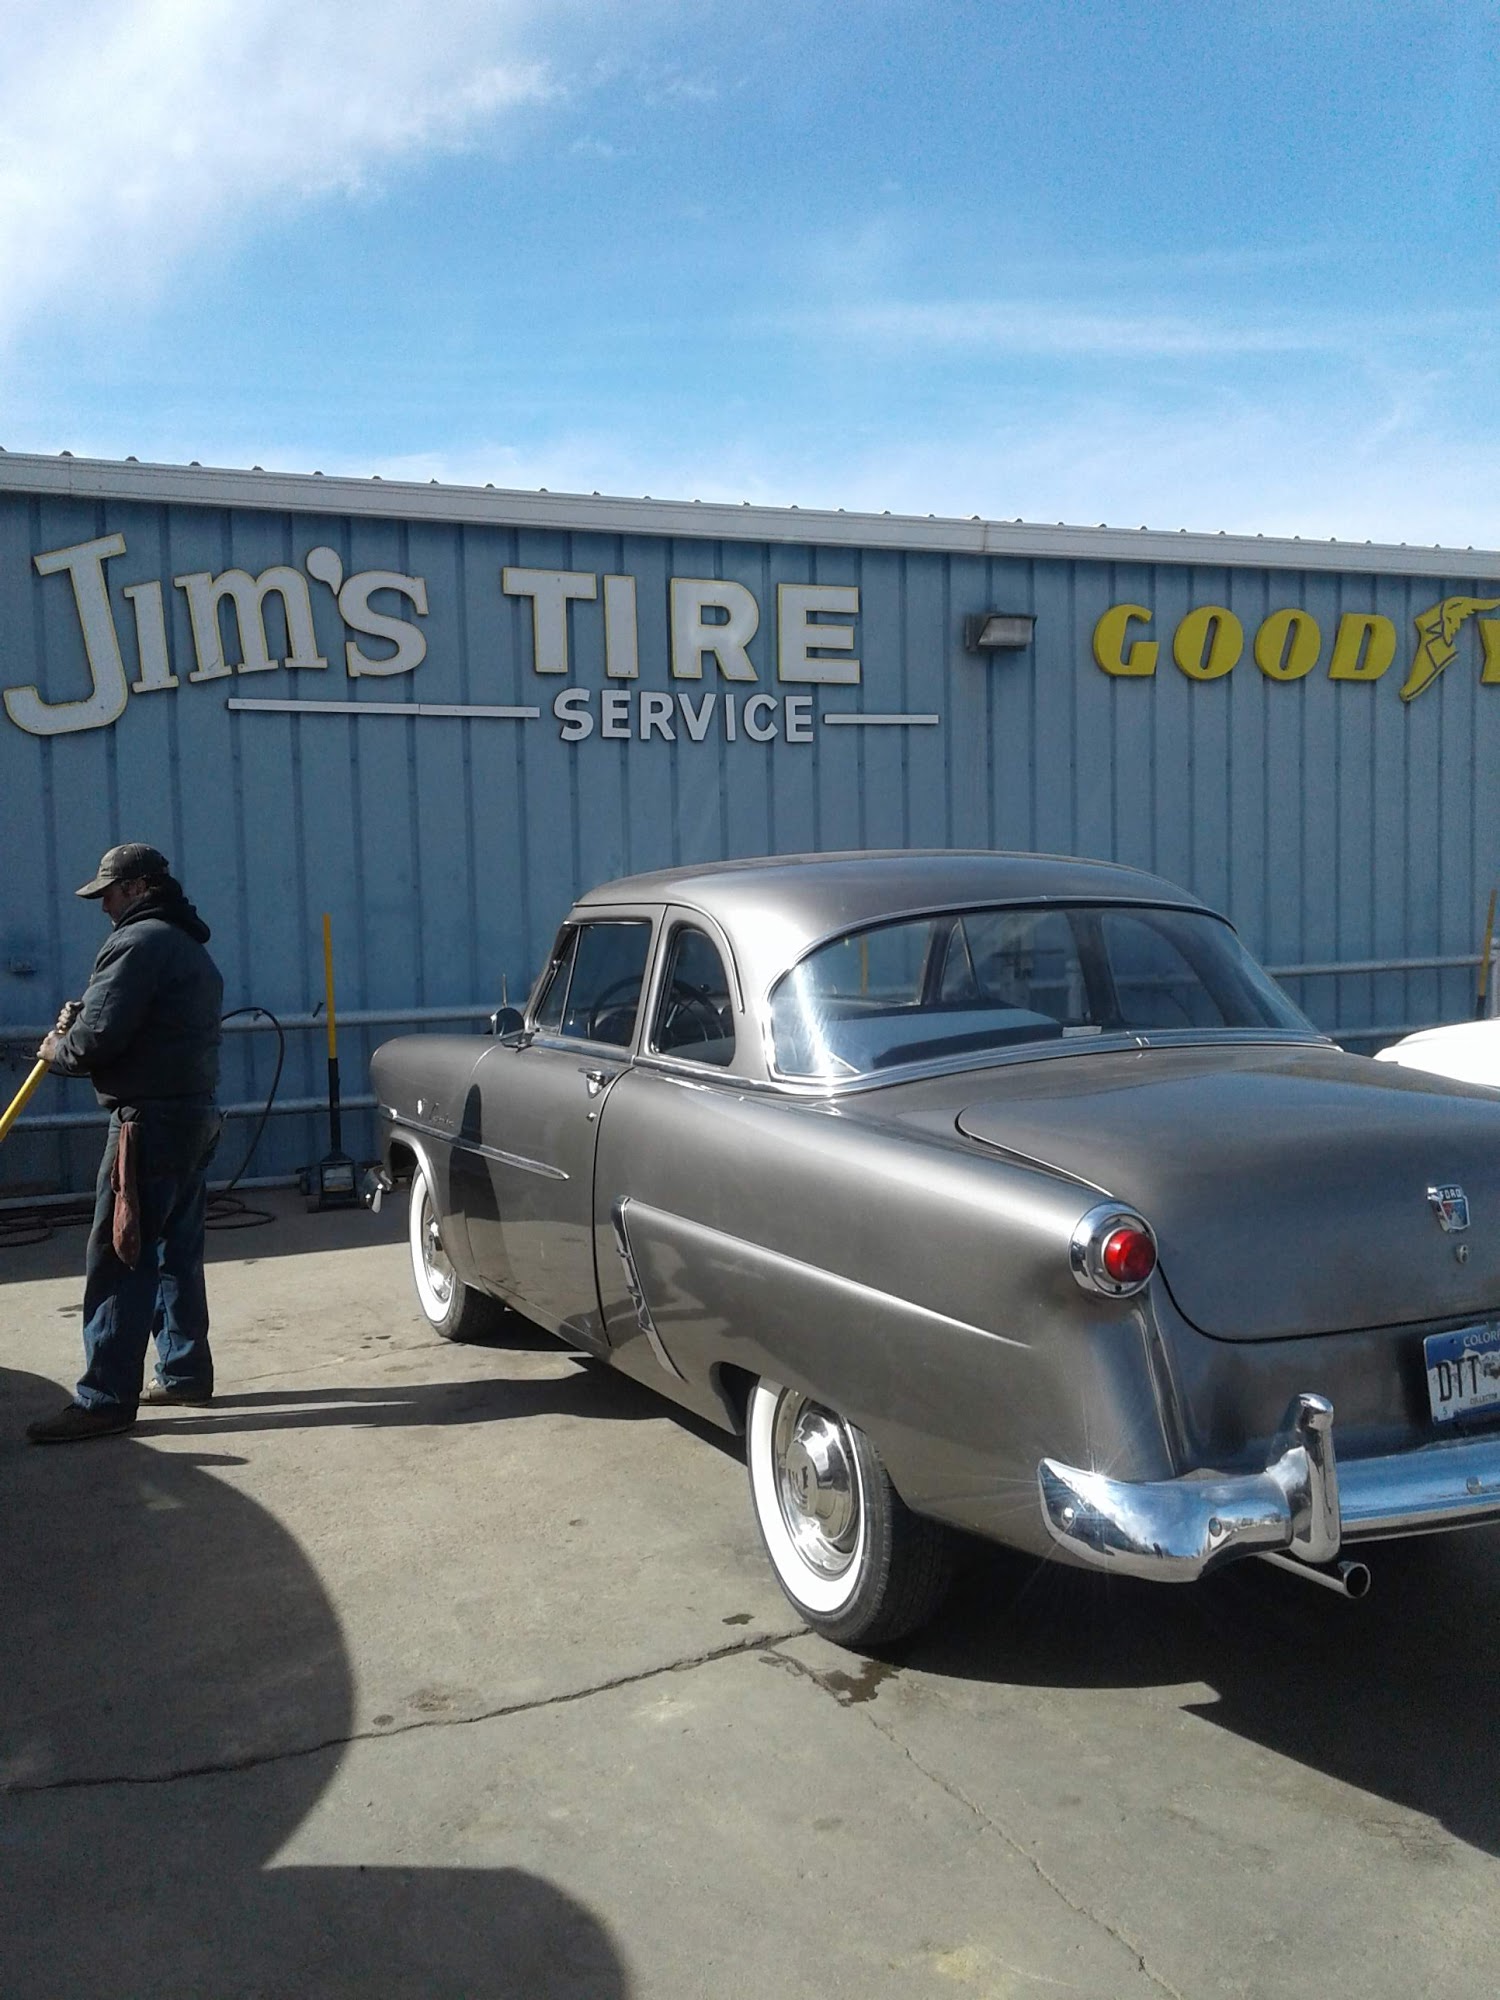 Jim's Tire Service Inc.